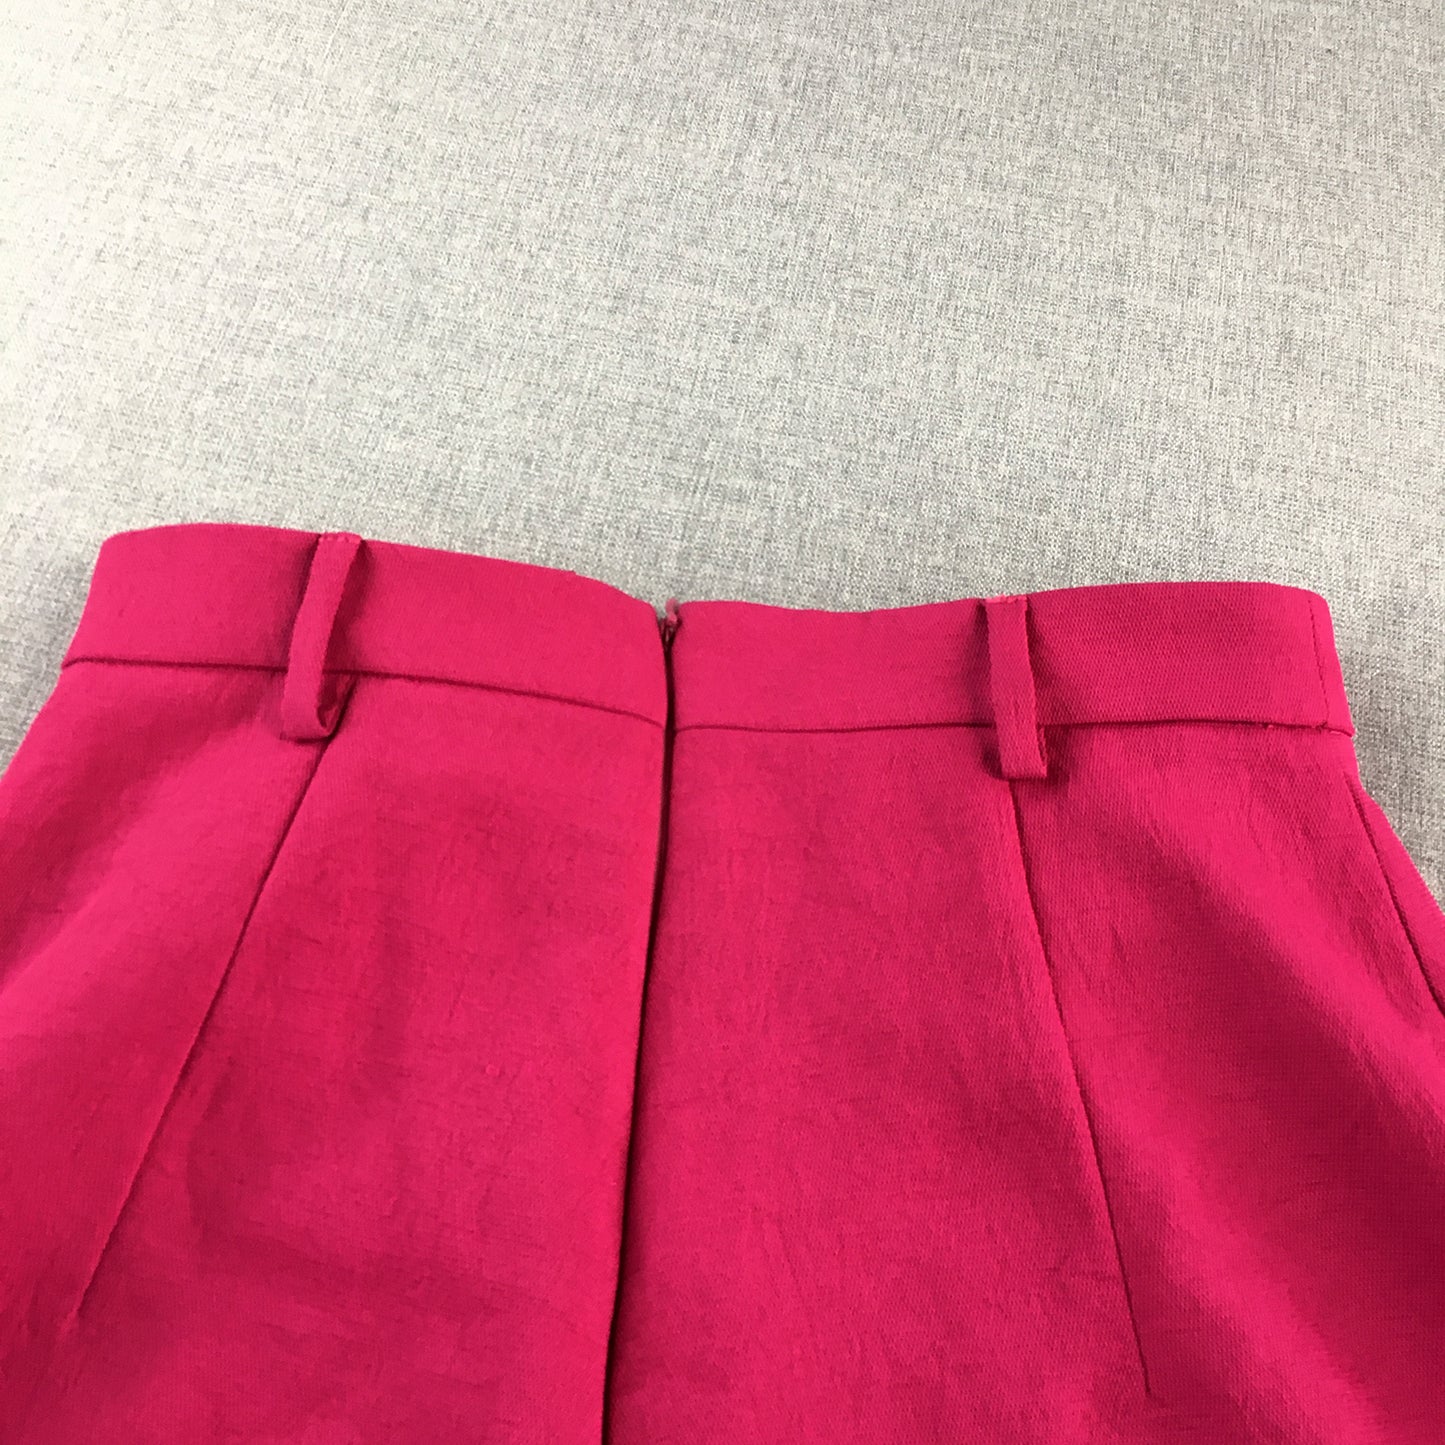 Kookai Womens Shorts Size 38 Pink Pockets Pleated